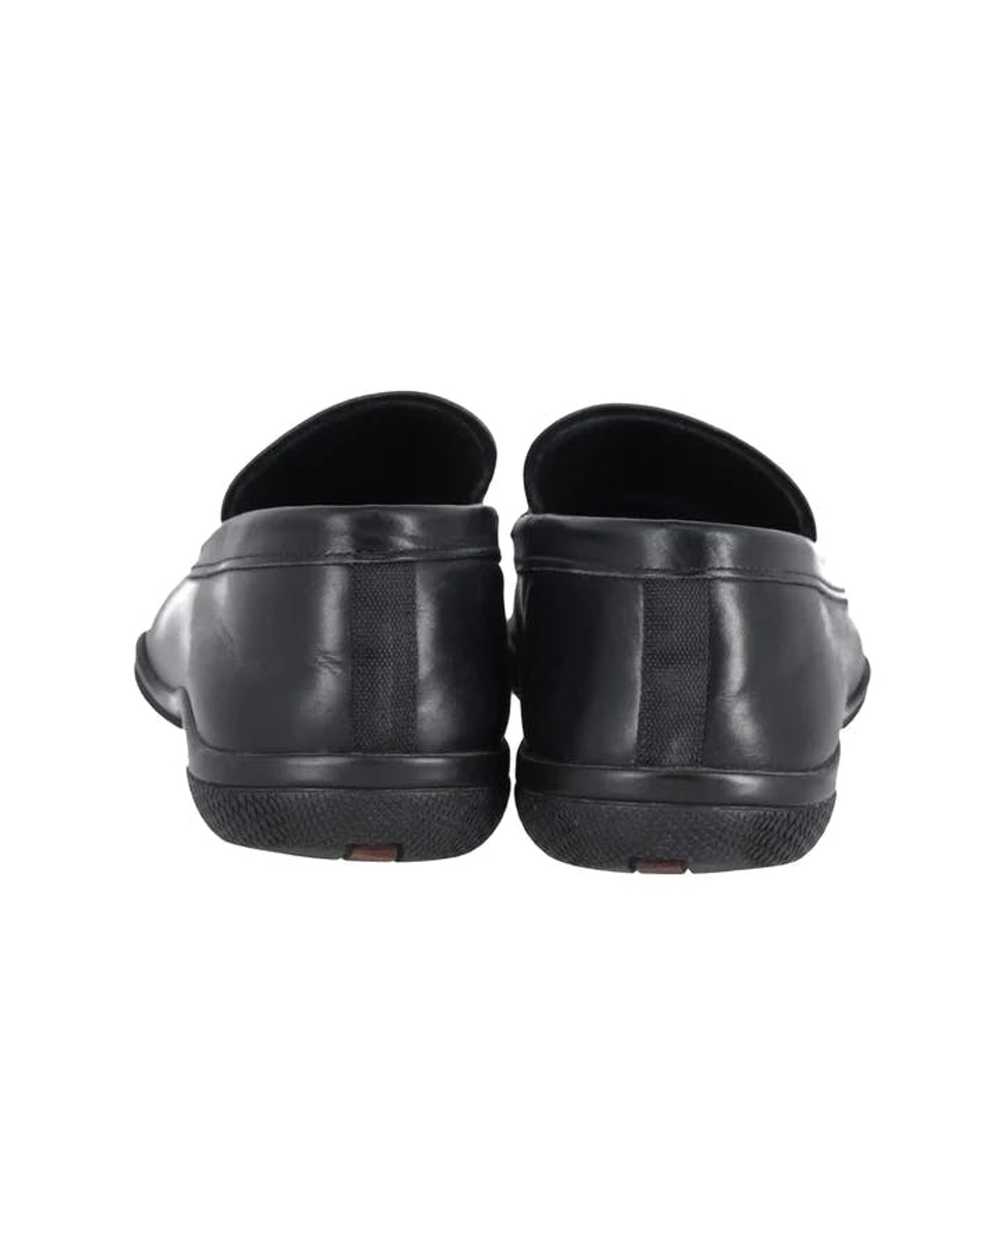 Prada o1b1f11ly0723 Loafers in Black - image 4